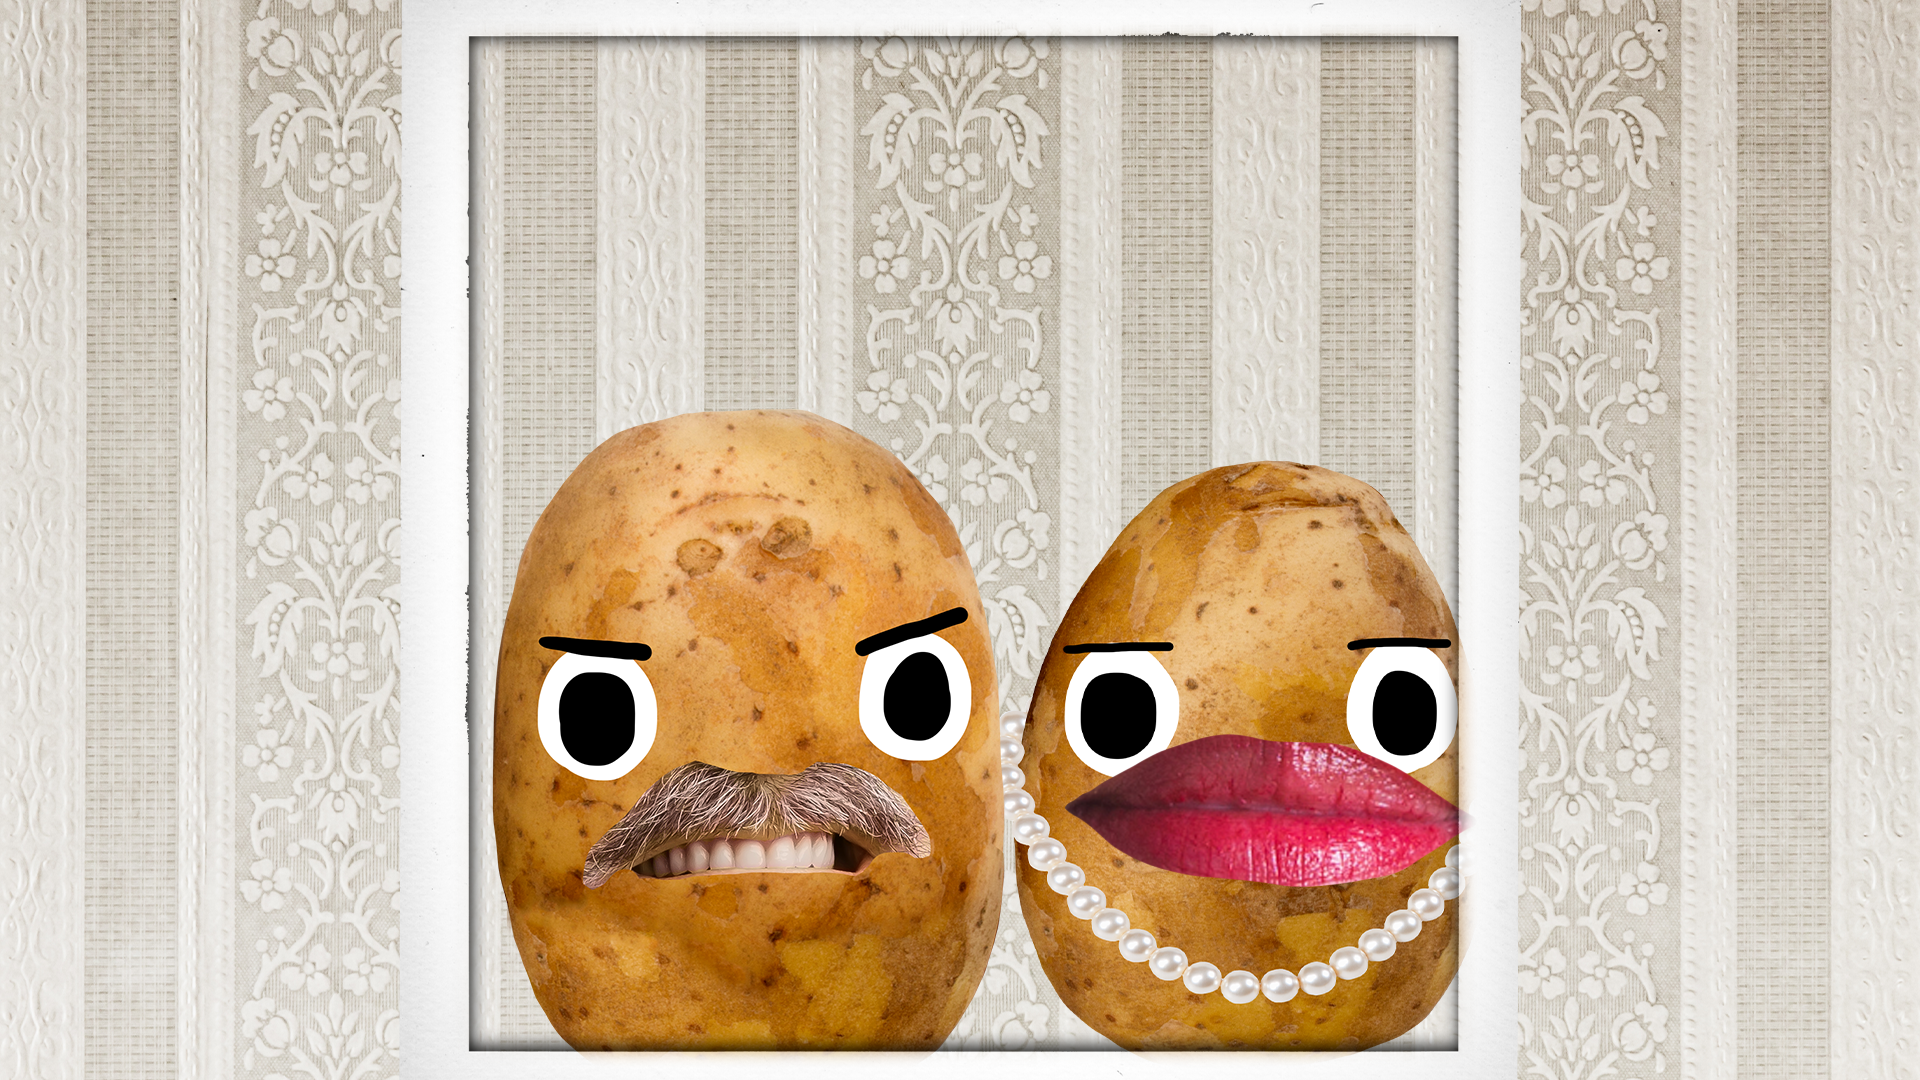 Potato Dursleys in picture frame